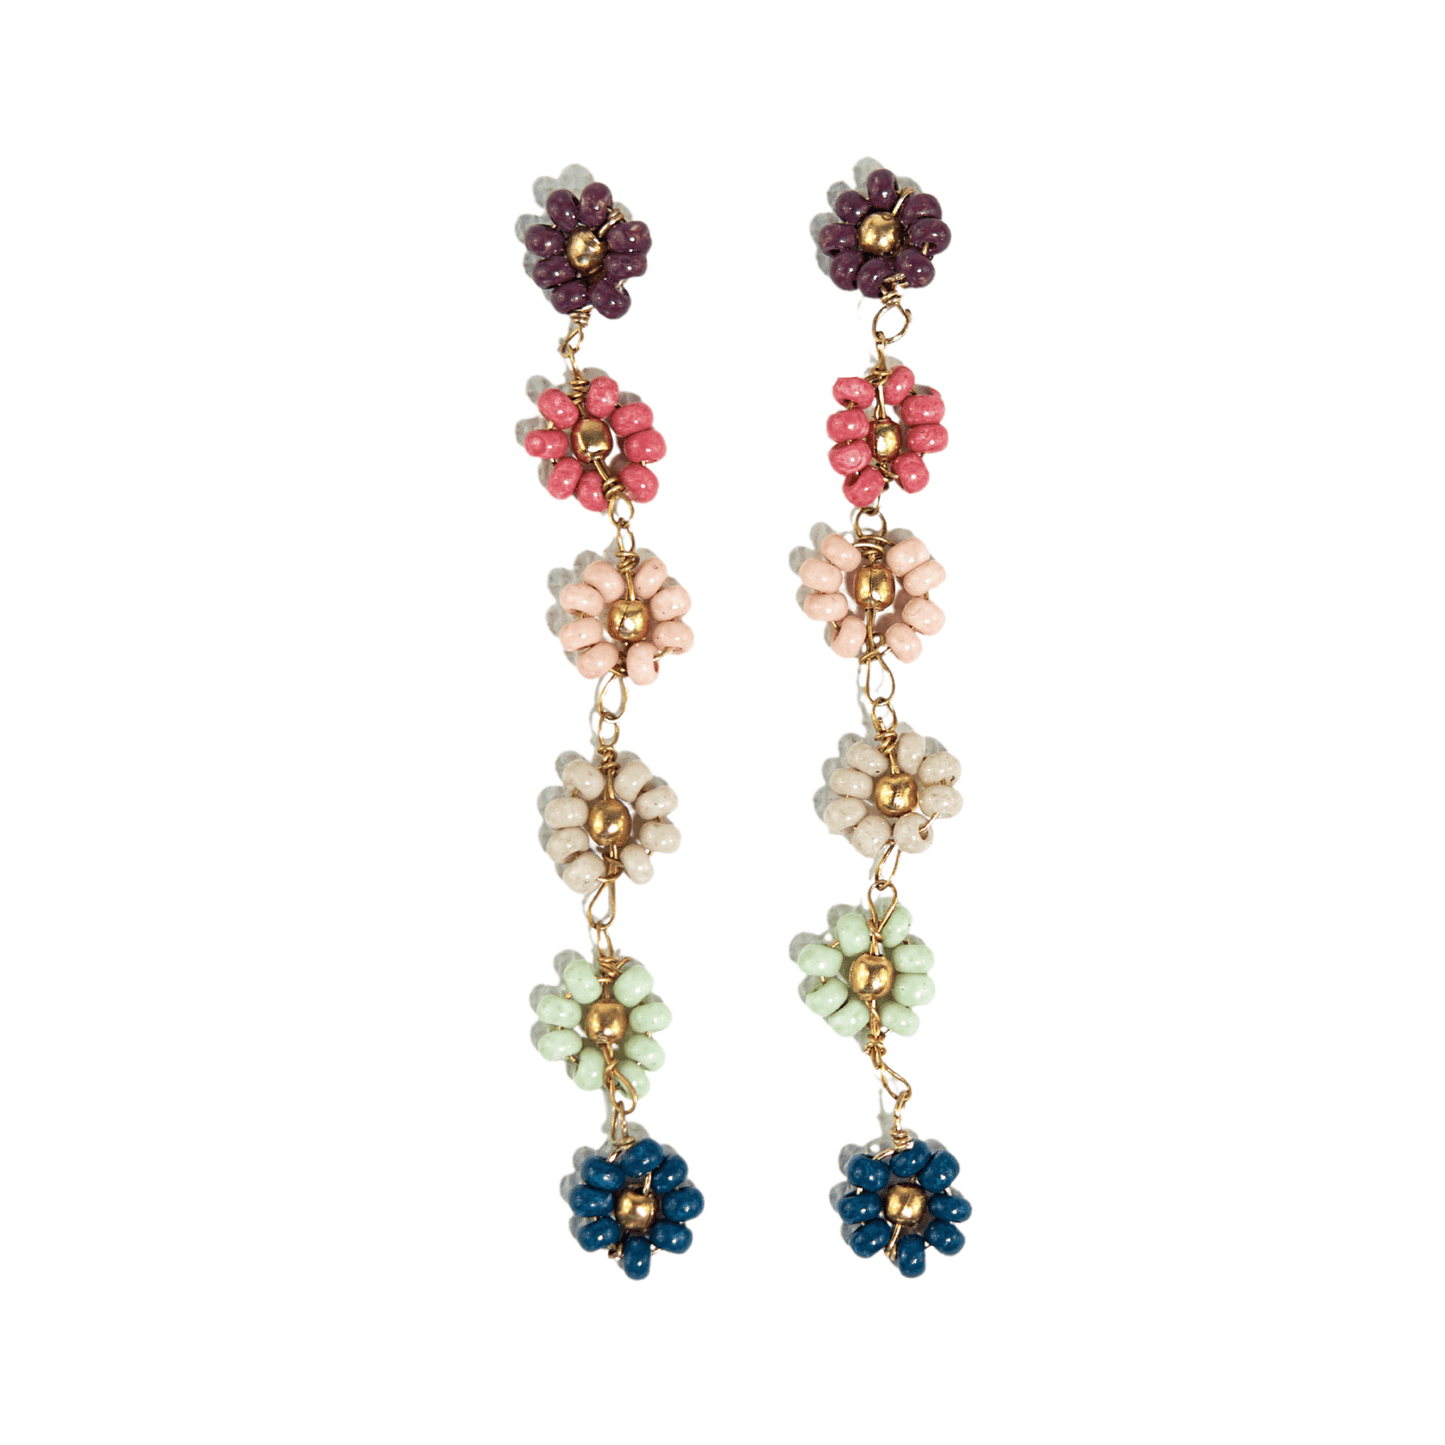 Amanda Flower Beaded Earrings - Multi Color